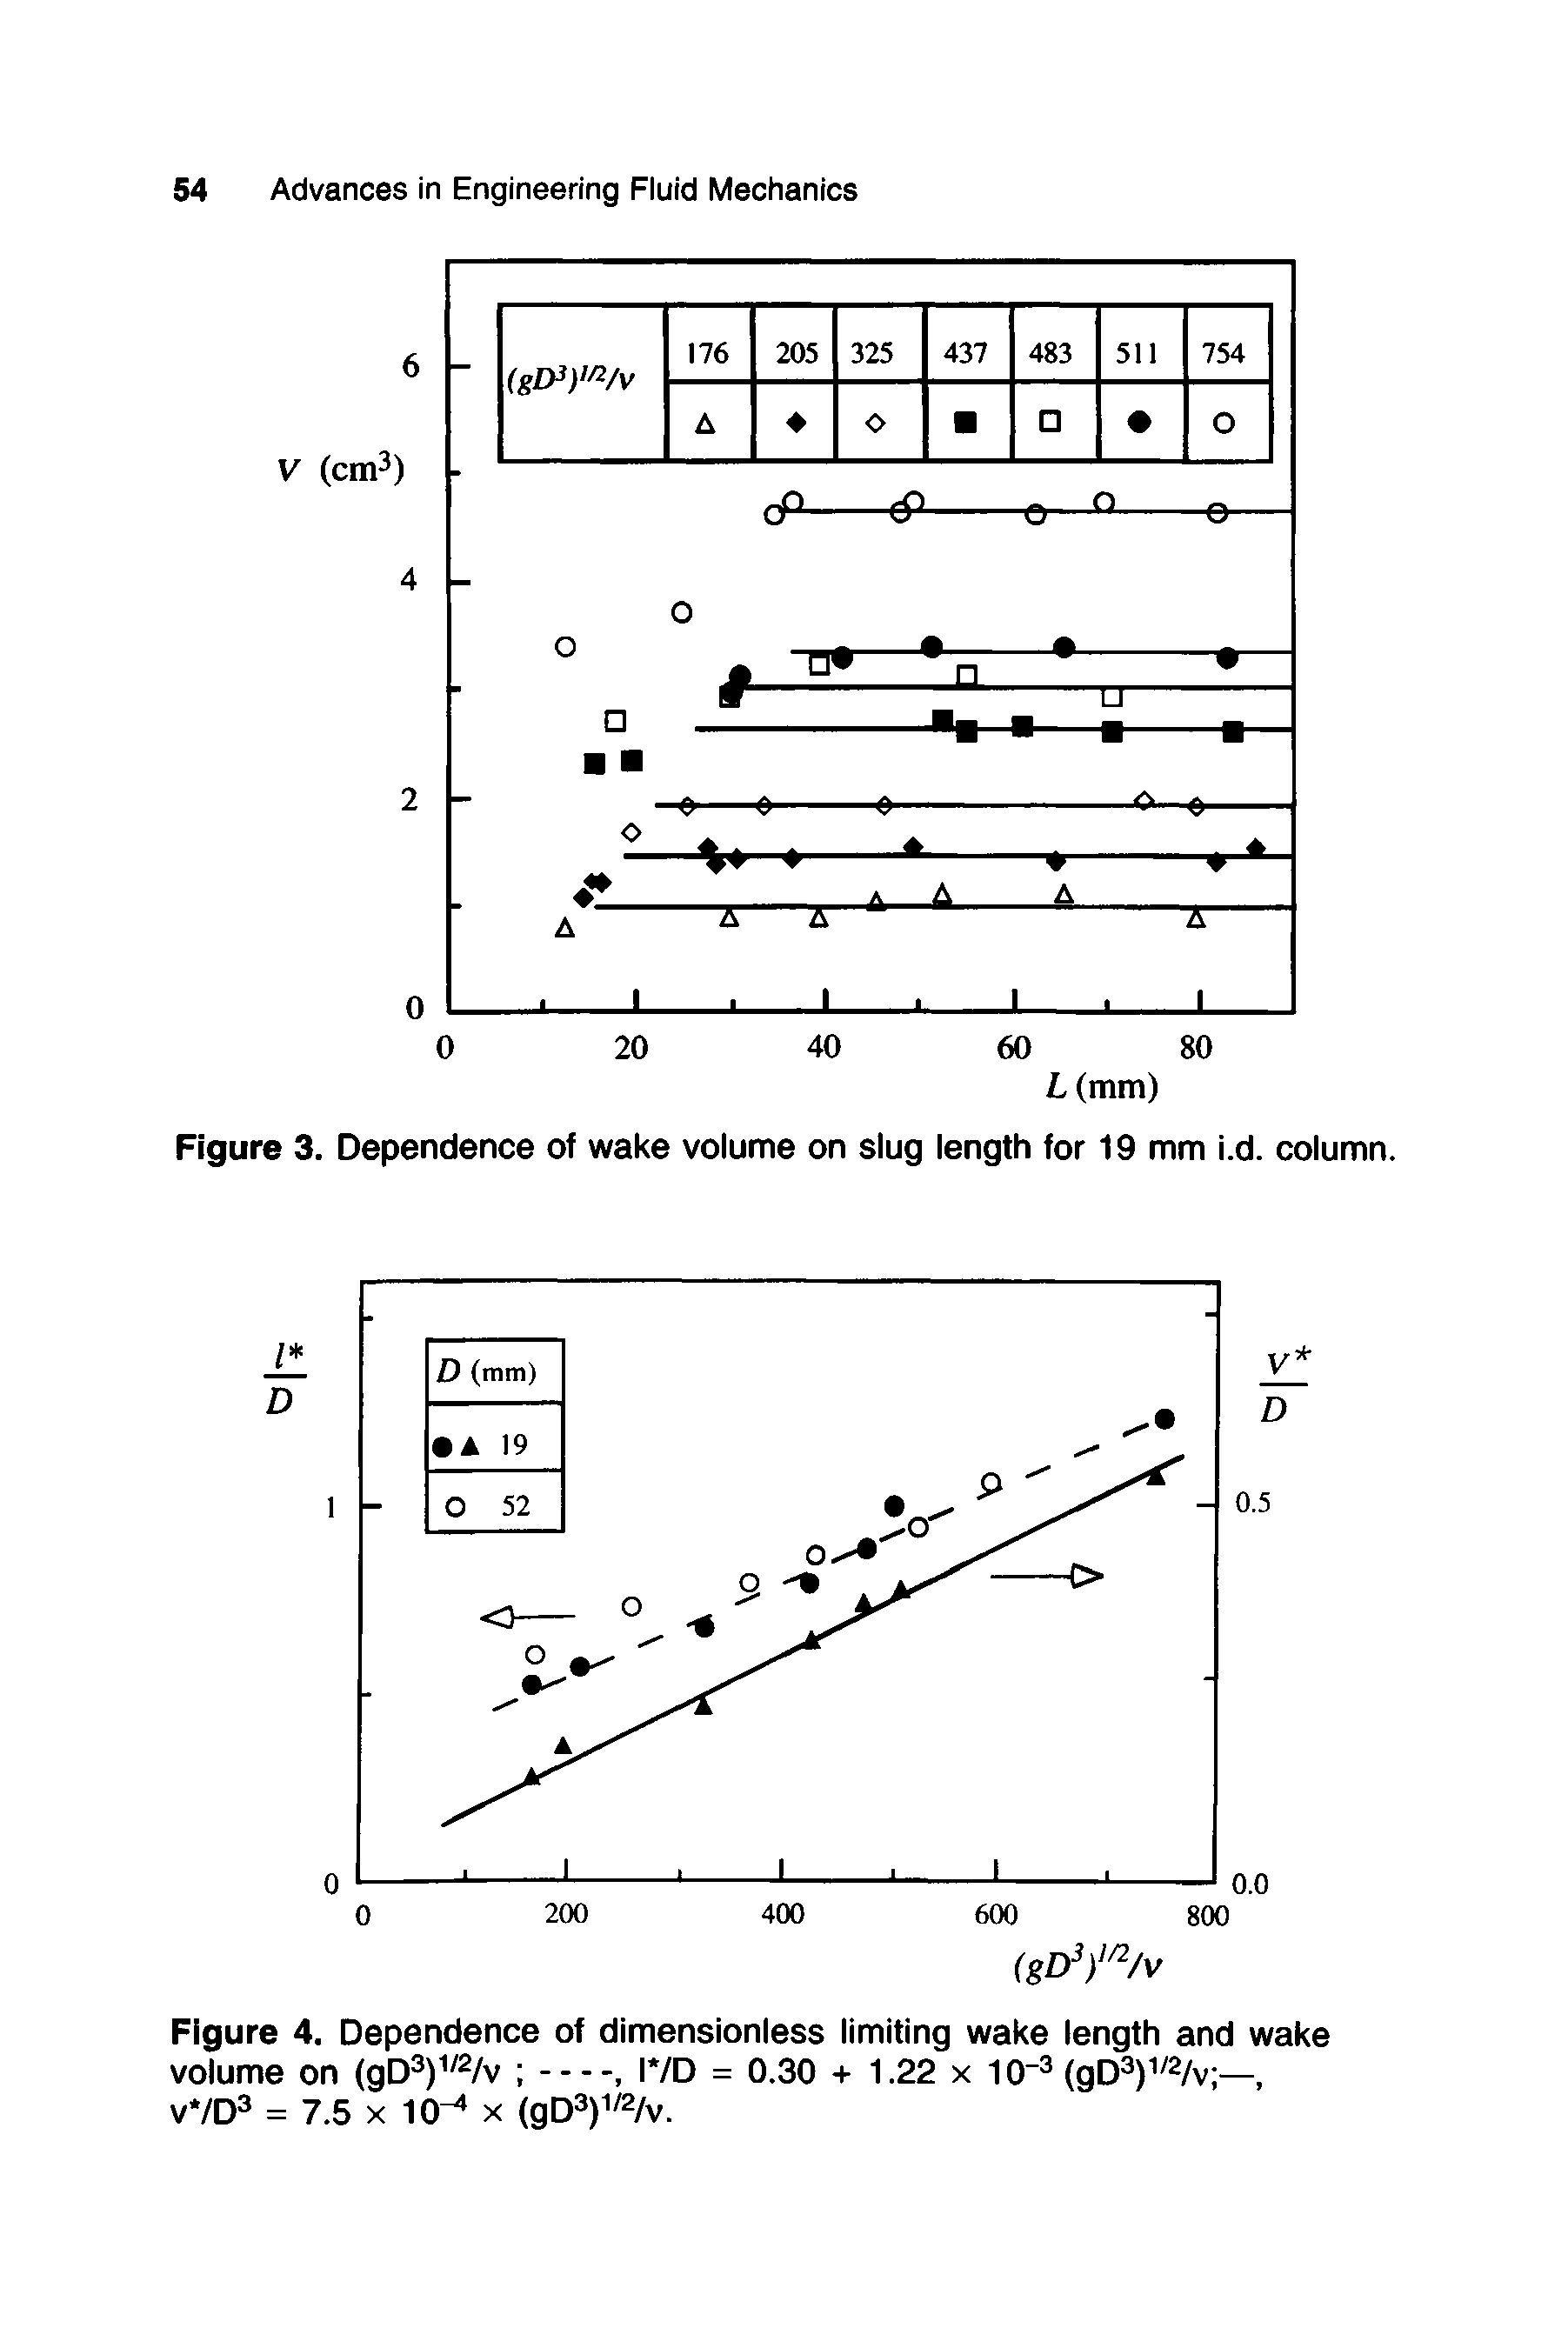 Figure 3. Dependence of wake volume on slug length for 19 mm i.d. column.